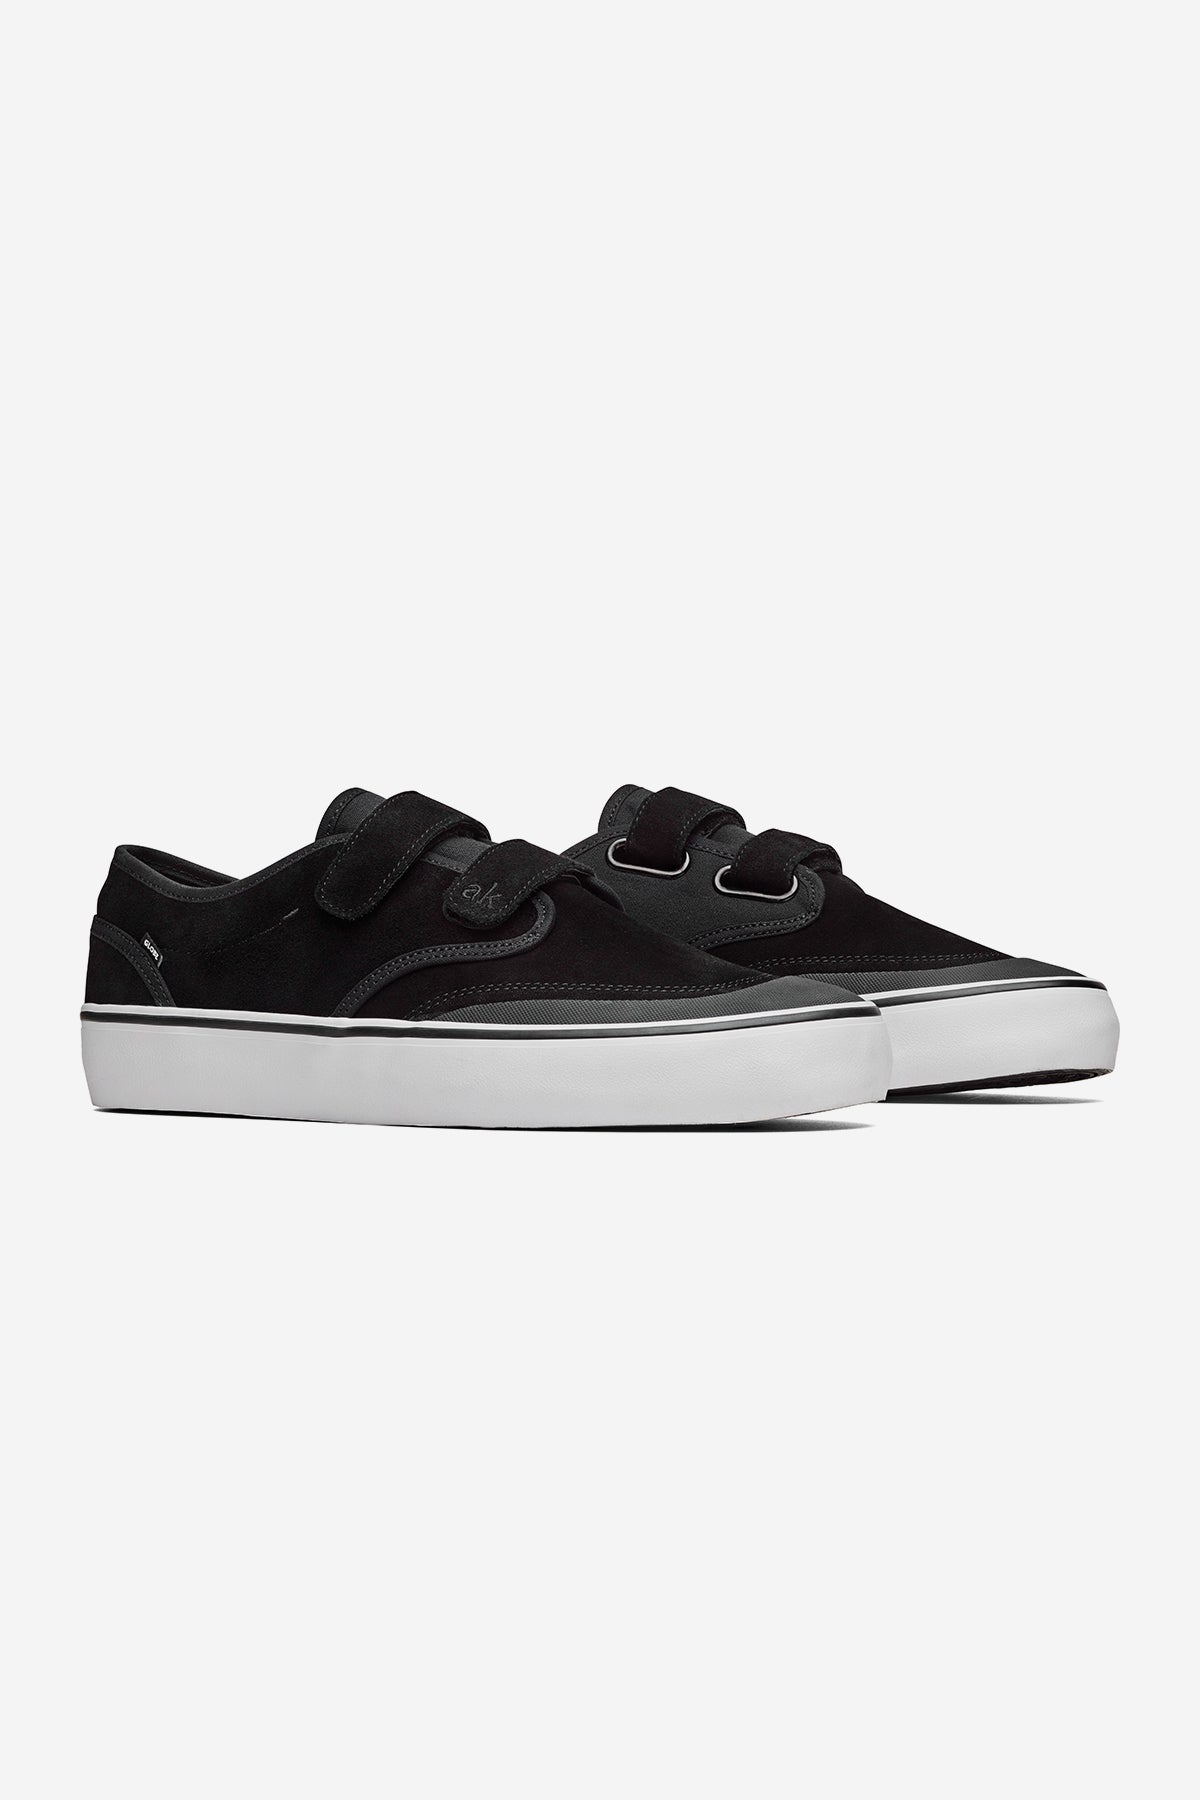 motley ii strap zwart white skateboard  schoenen